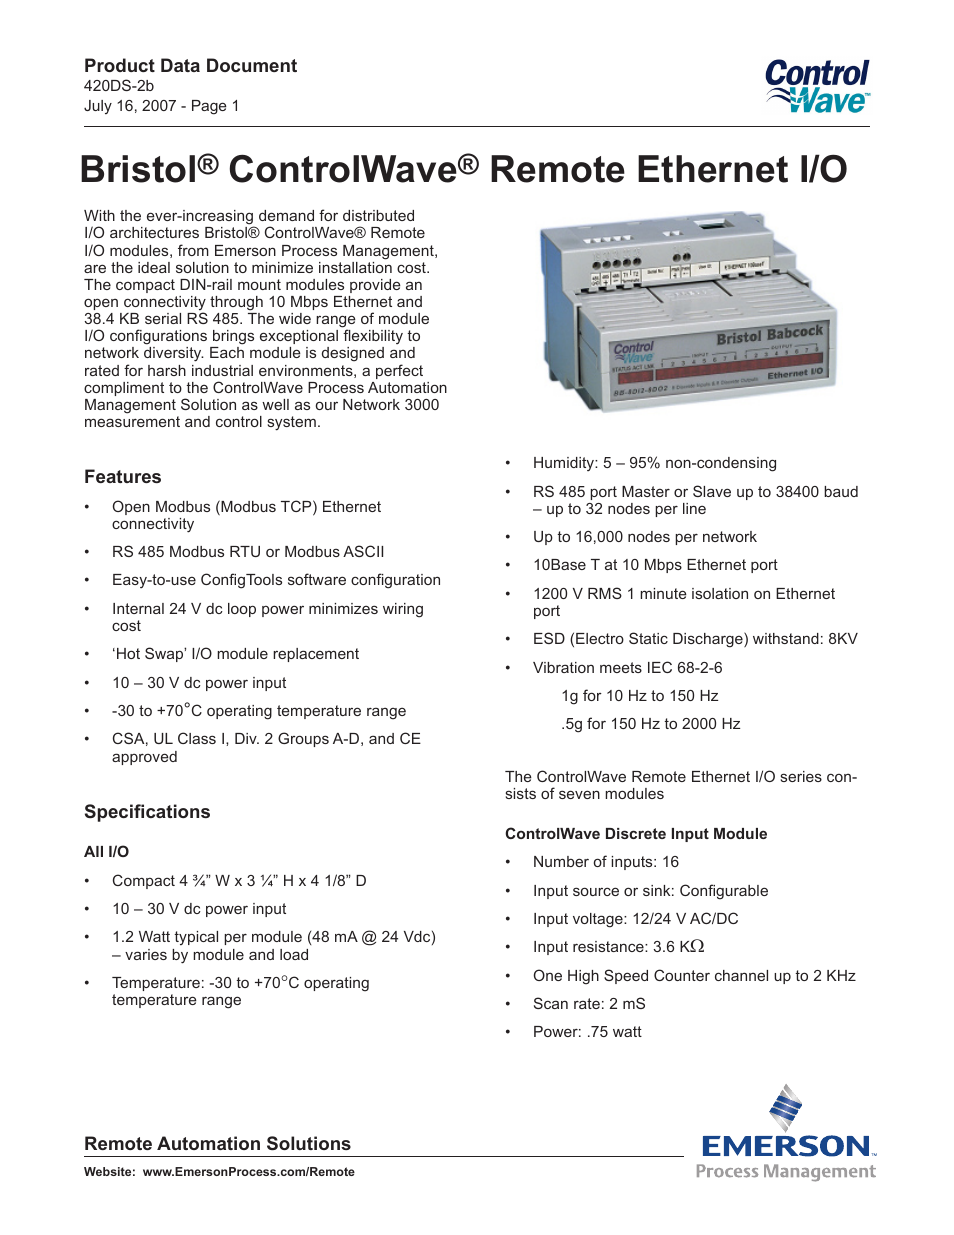 ControlWave Remote Ethernet I/O